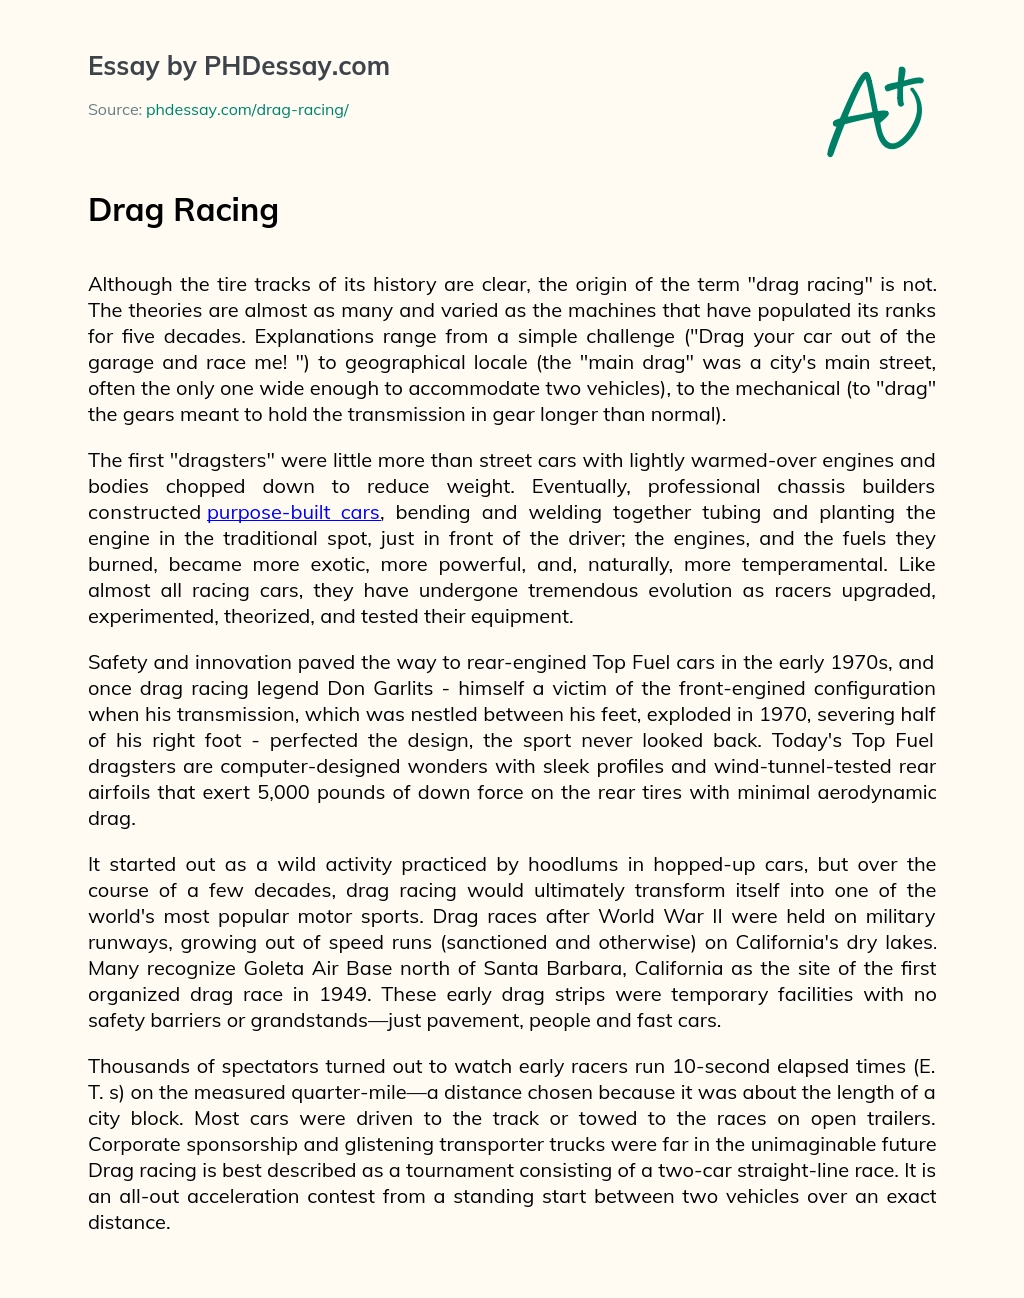 Drag Racing essay